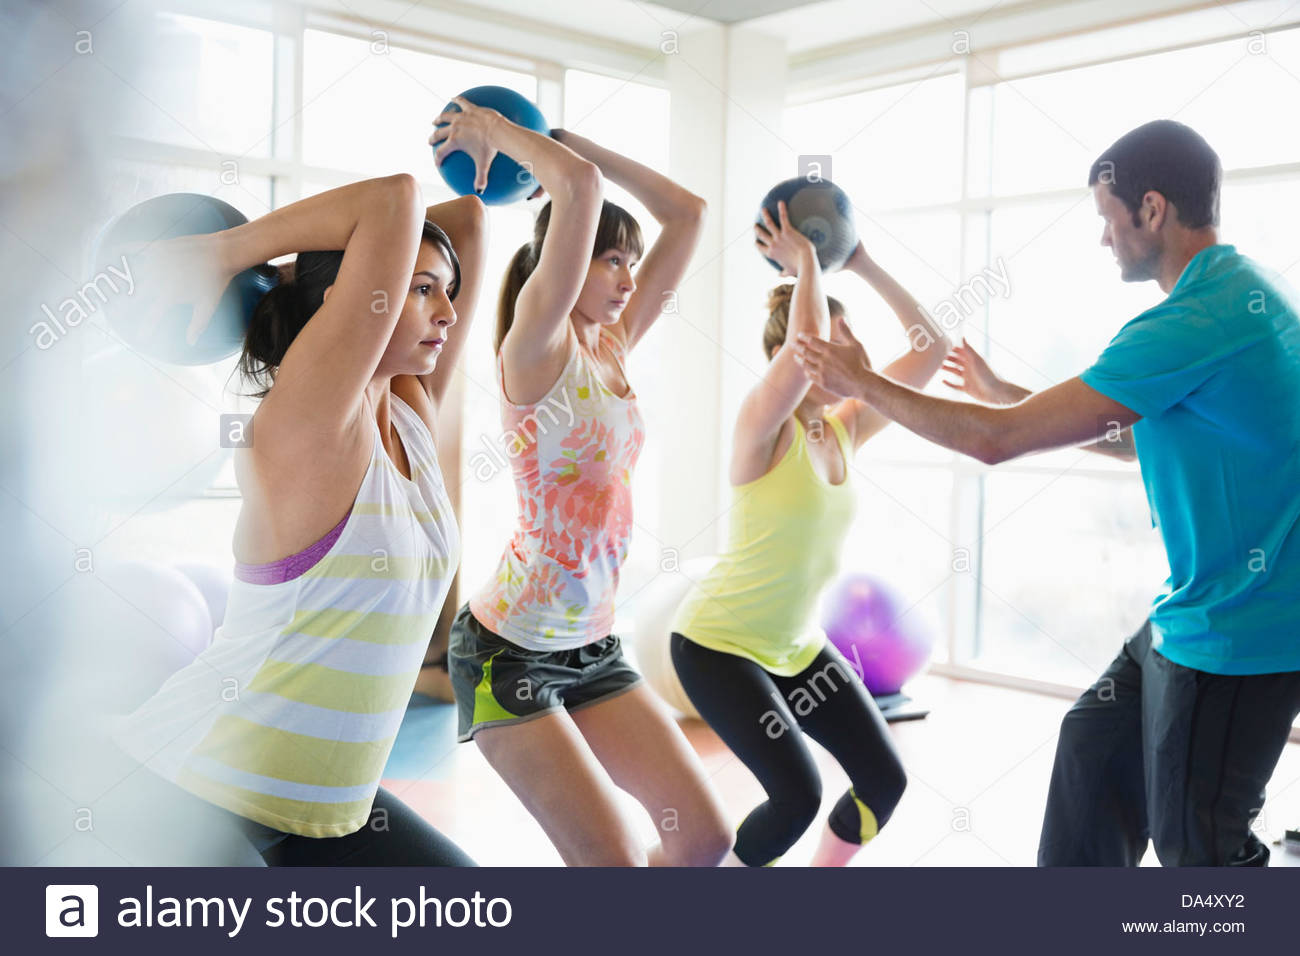 Women using medicine balls in fitness class Stock Photo